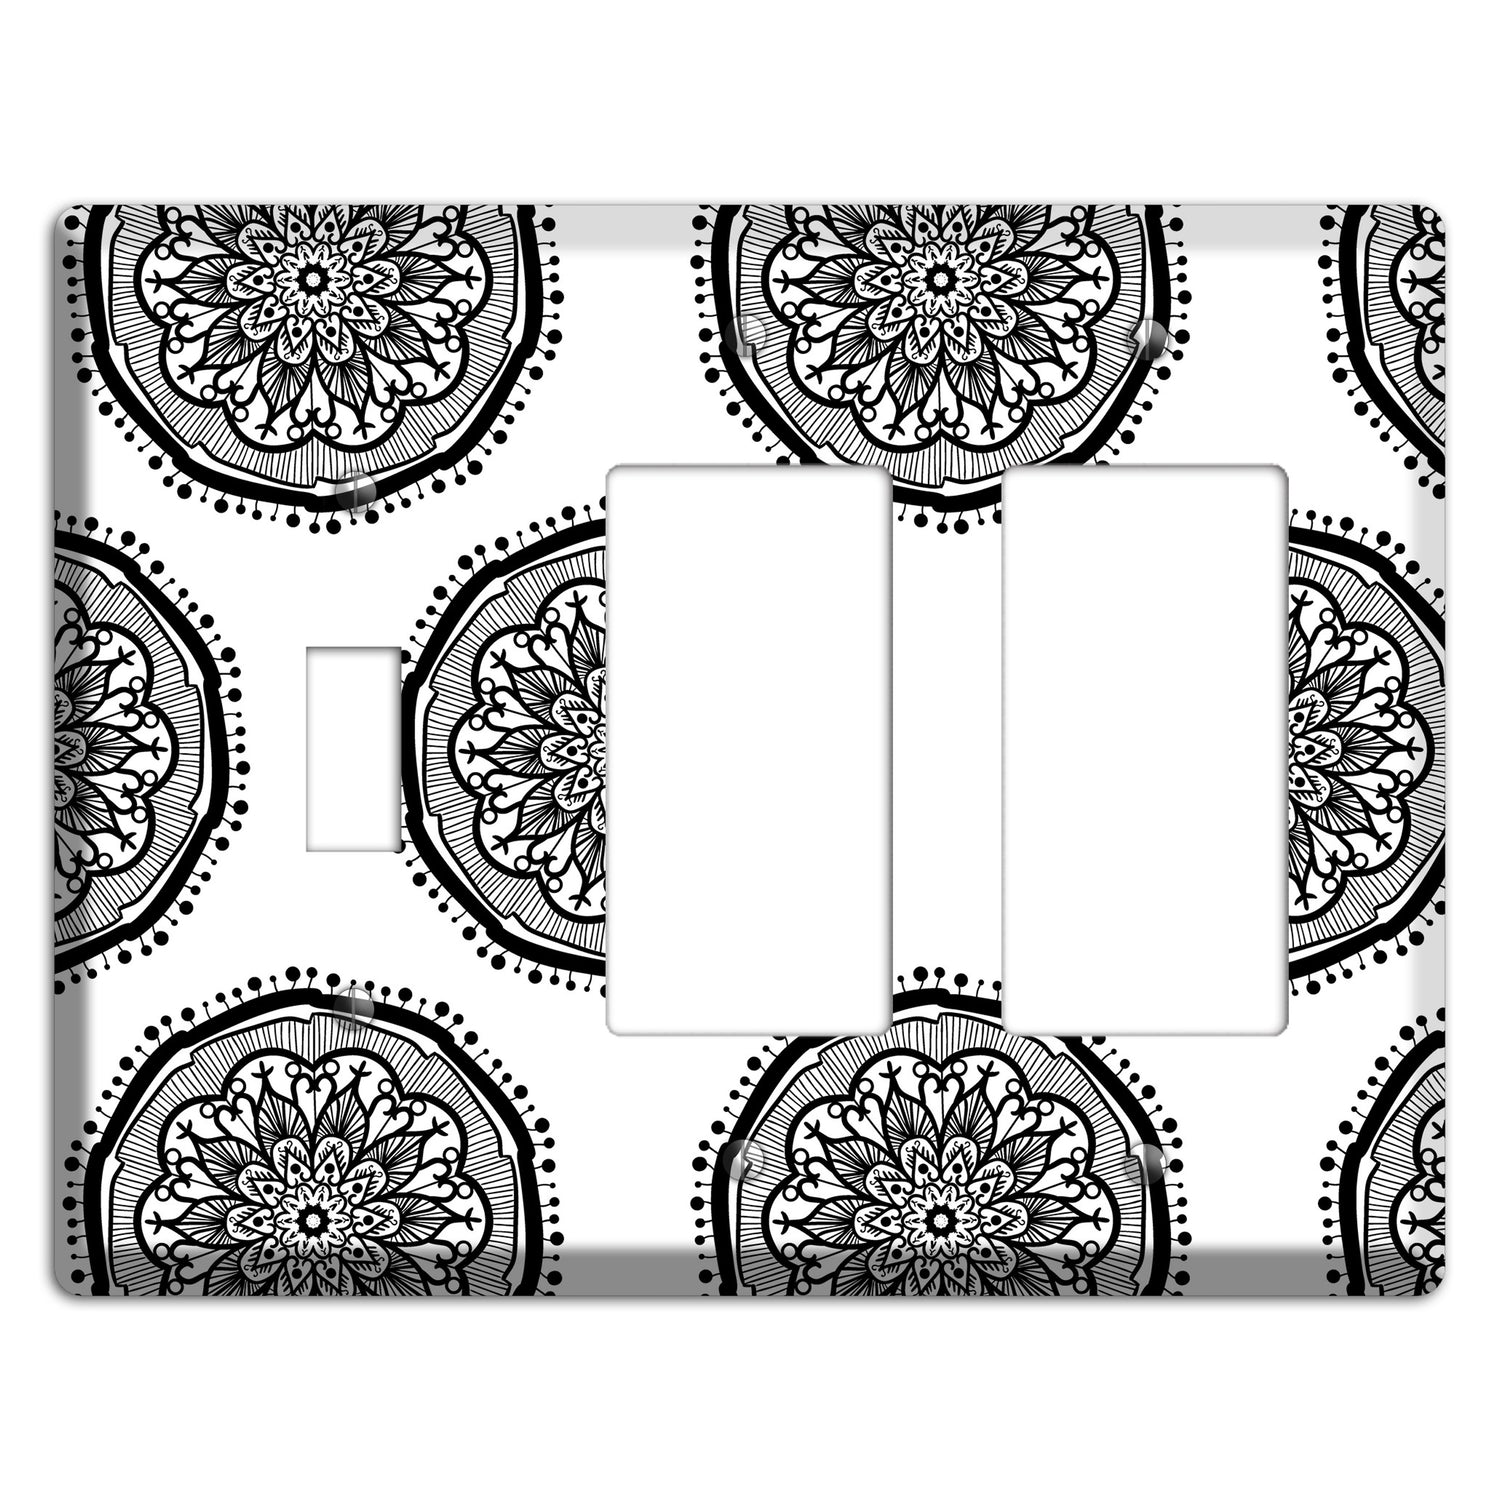 Mandala Black and White Style R Cover Plates Toggle / 2 Rocker Wallplate